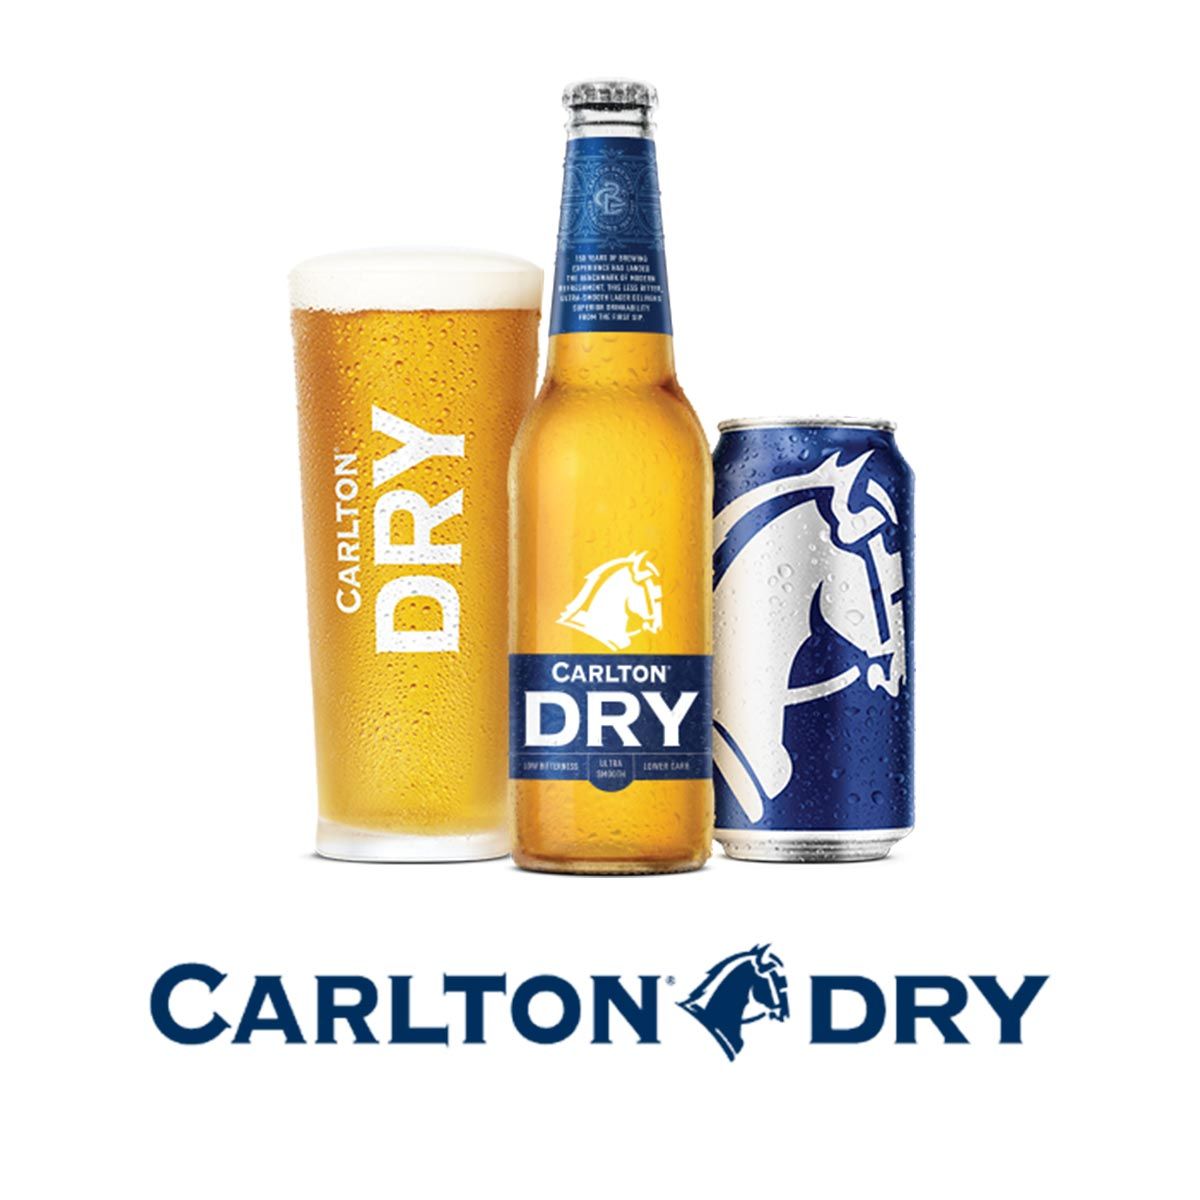 [REVIEW] Carlton Dry Packaging Update